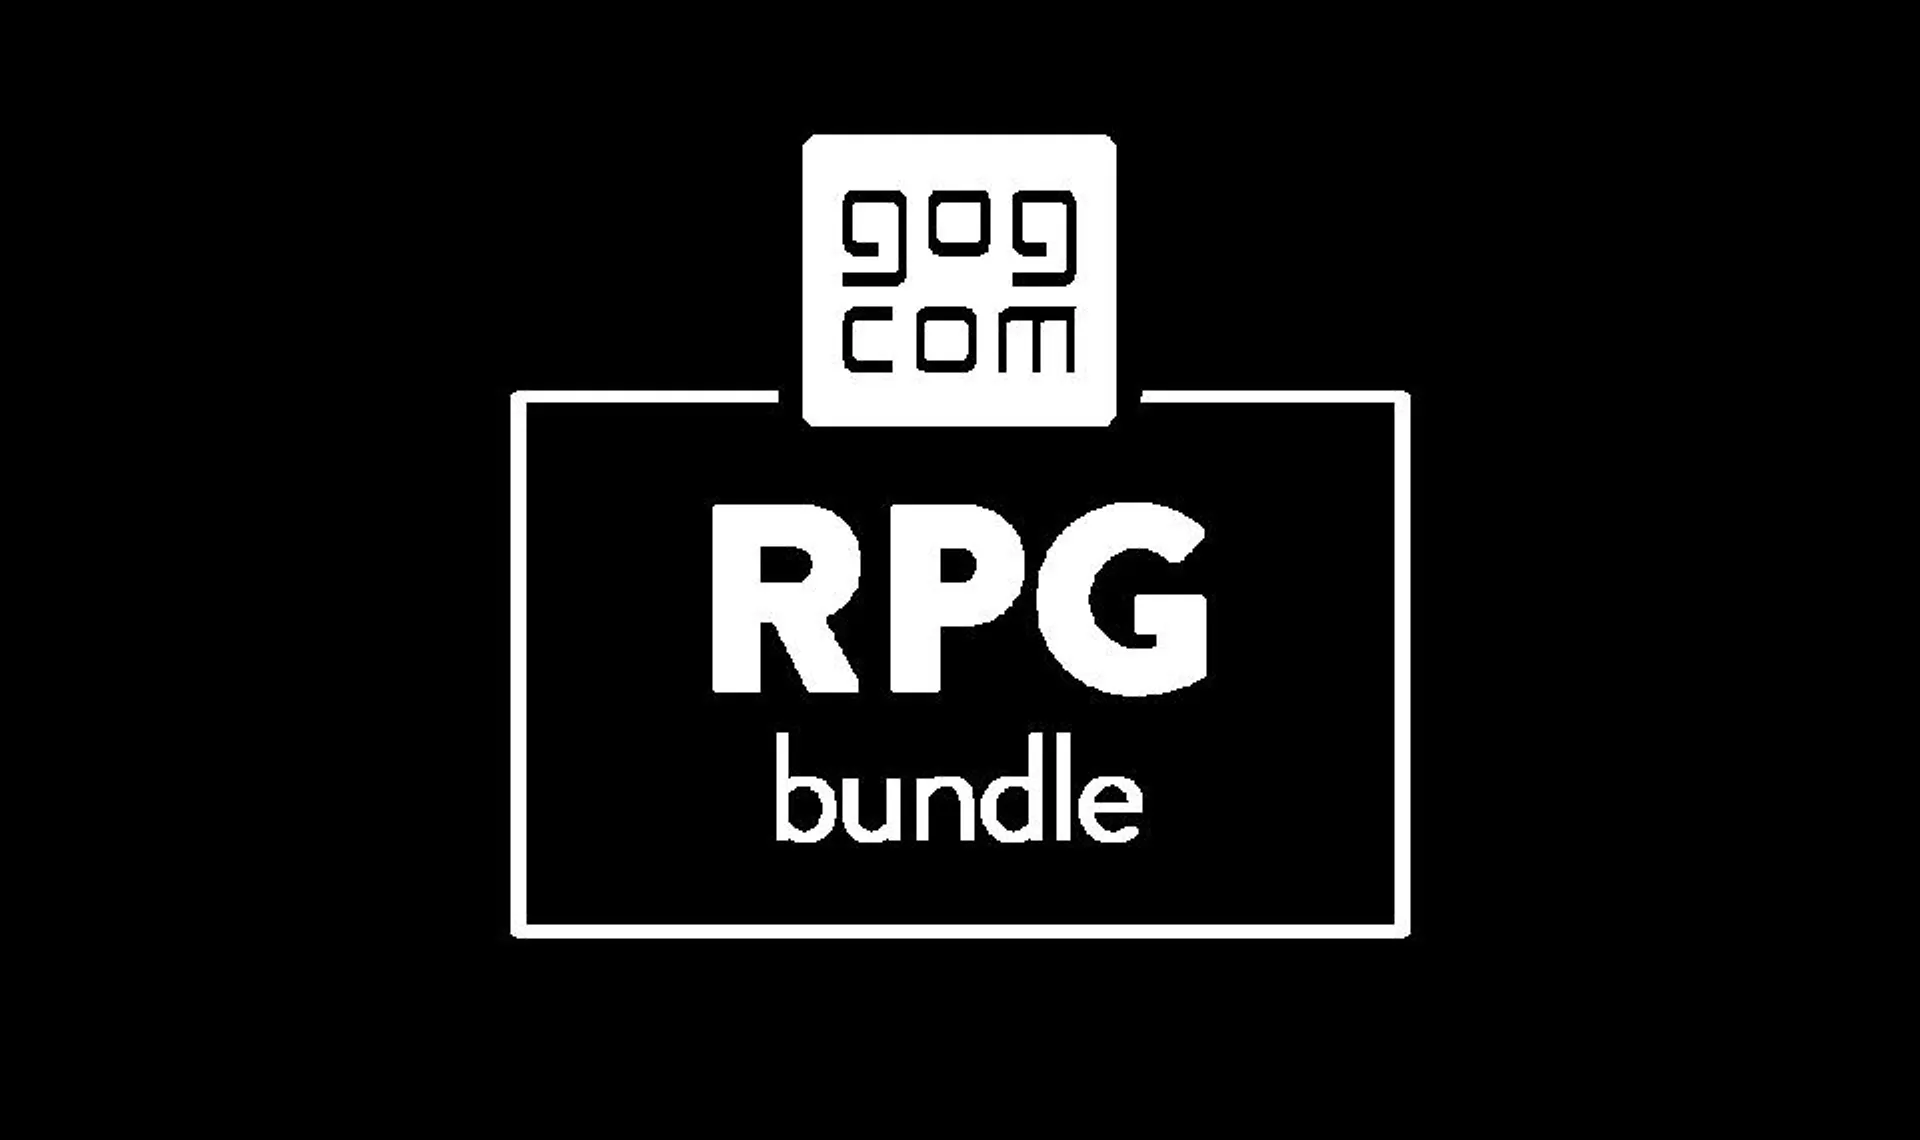 GOG RPG Bundle